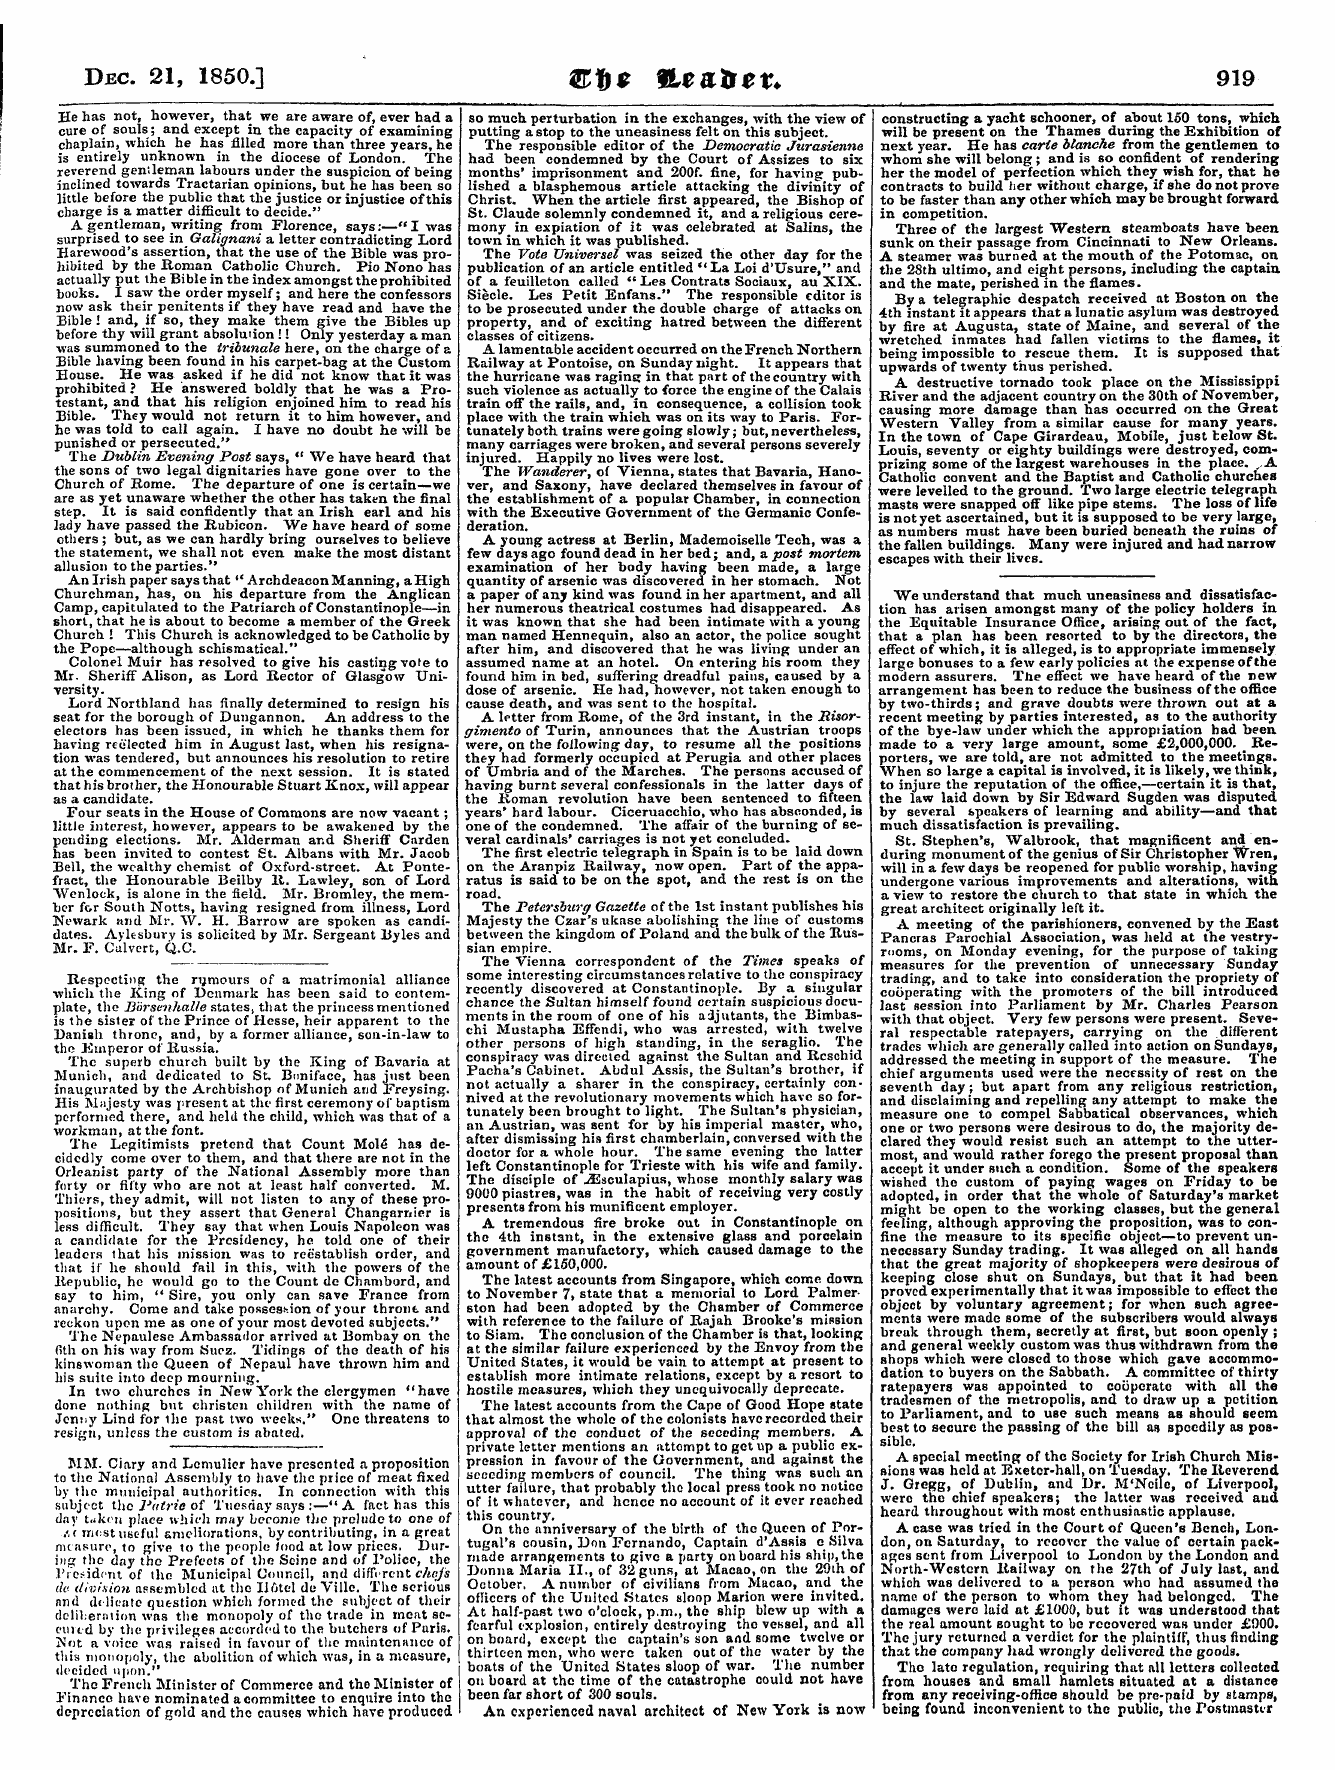 Leader (1850-1860): jS F Y, Country edition - Dec. 21, 1850.] &Ff$ 9l$&1tet> 919